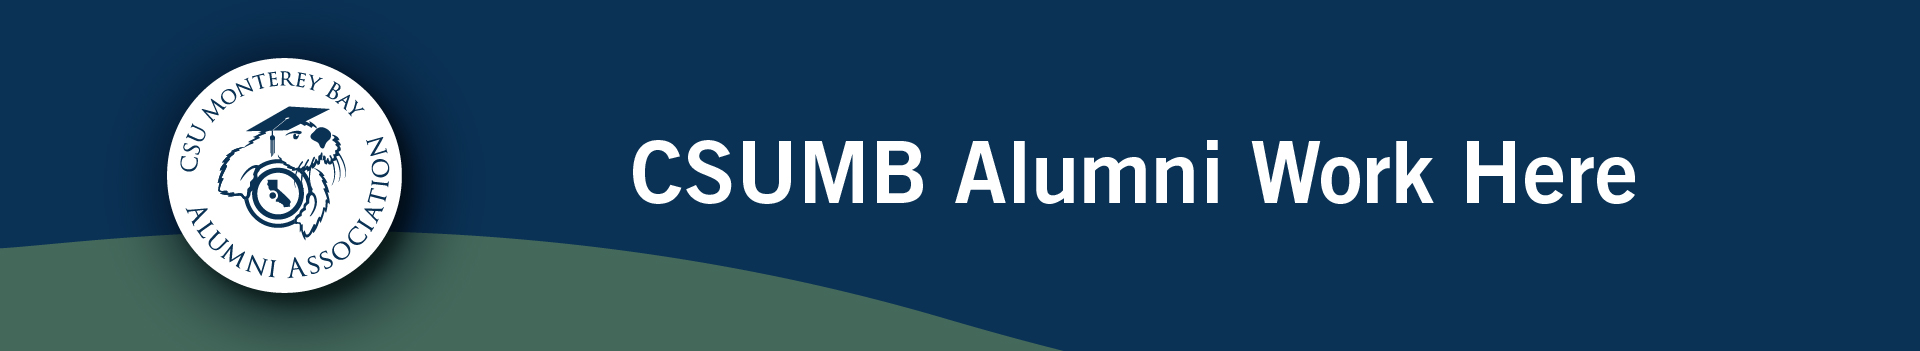 CSUMB Alumni Association logo with text 